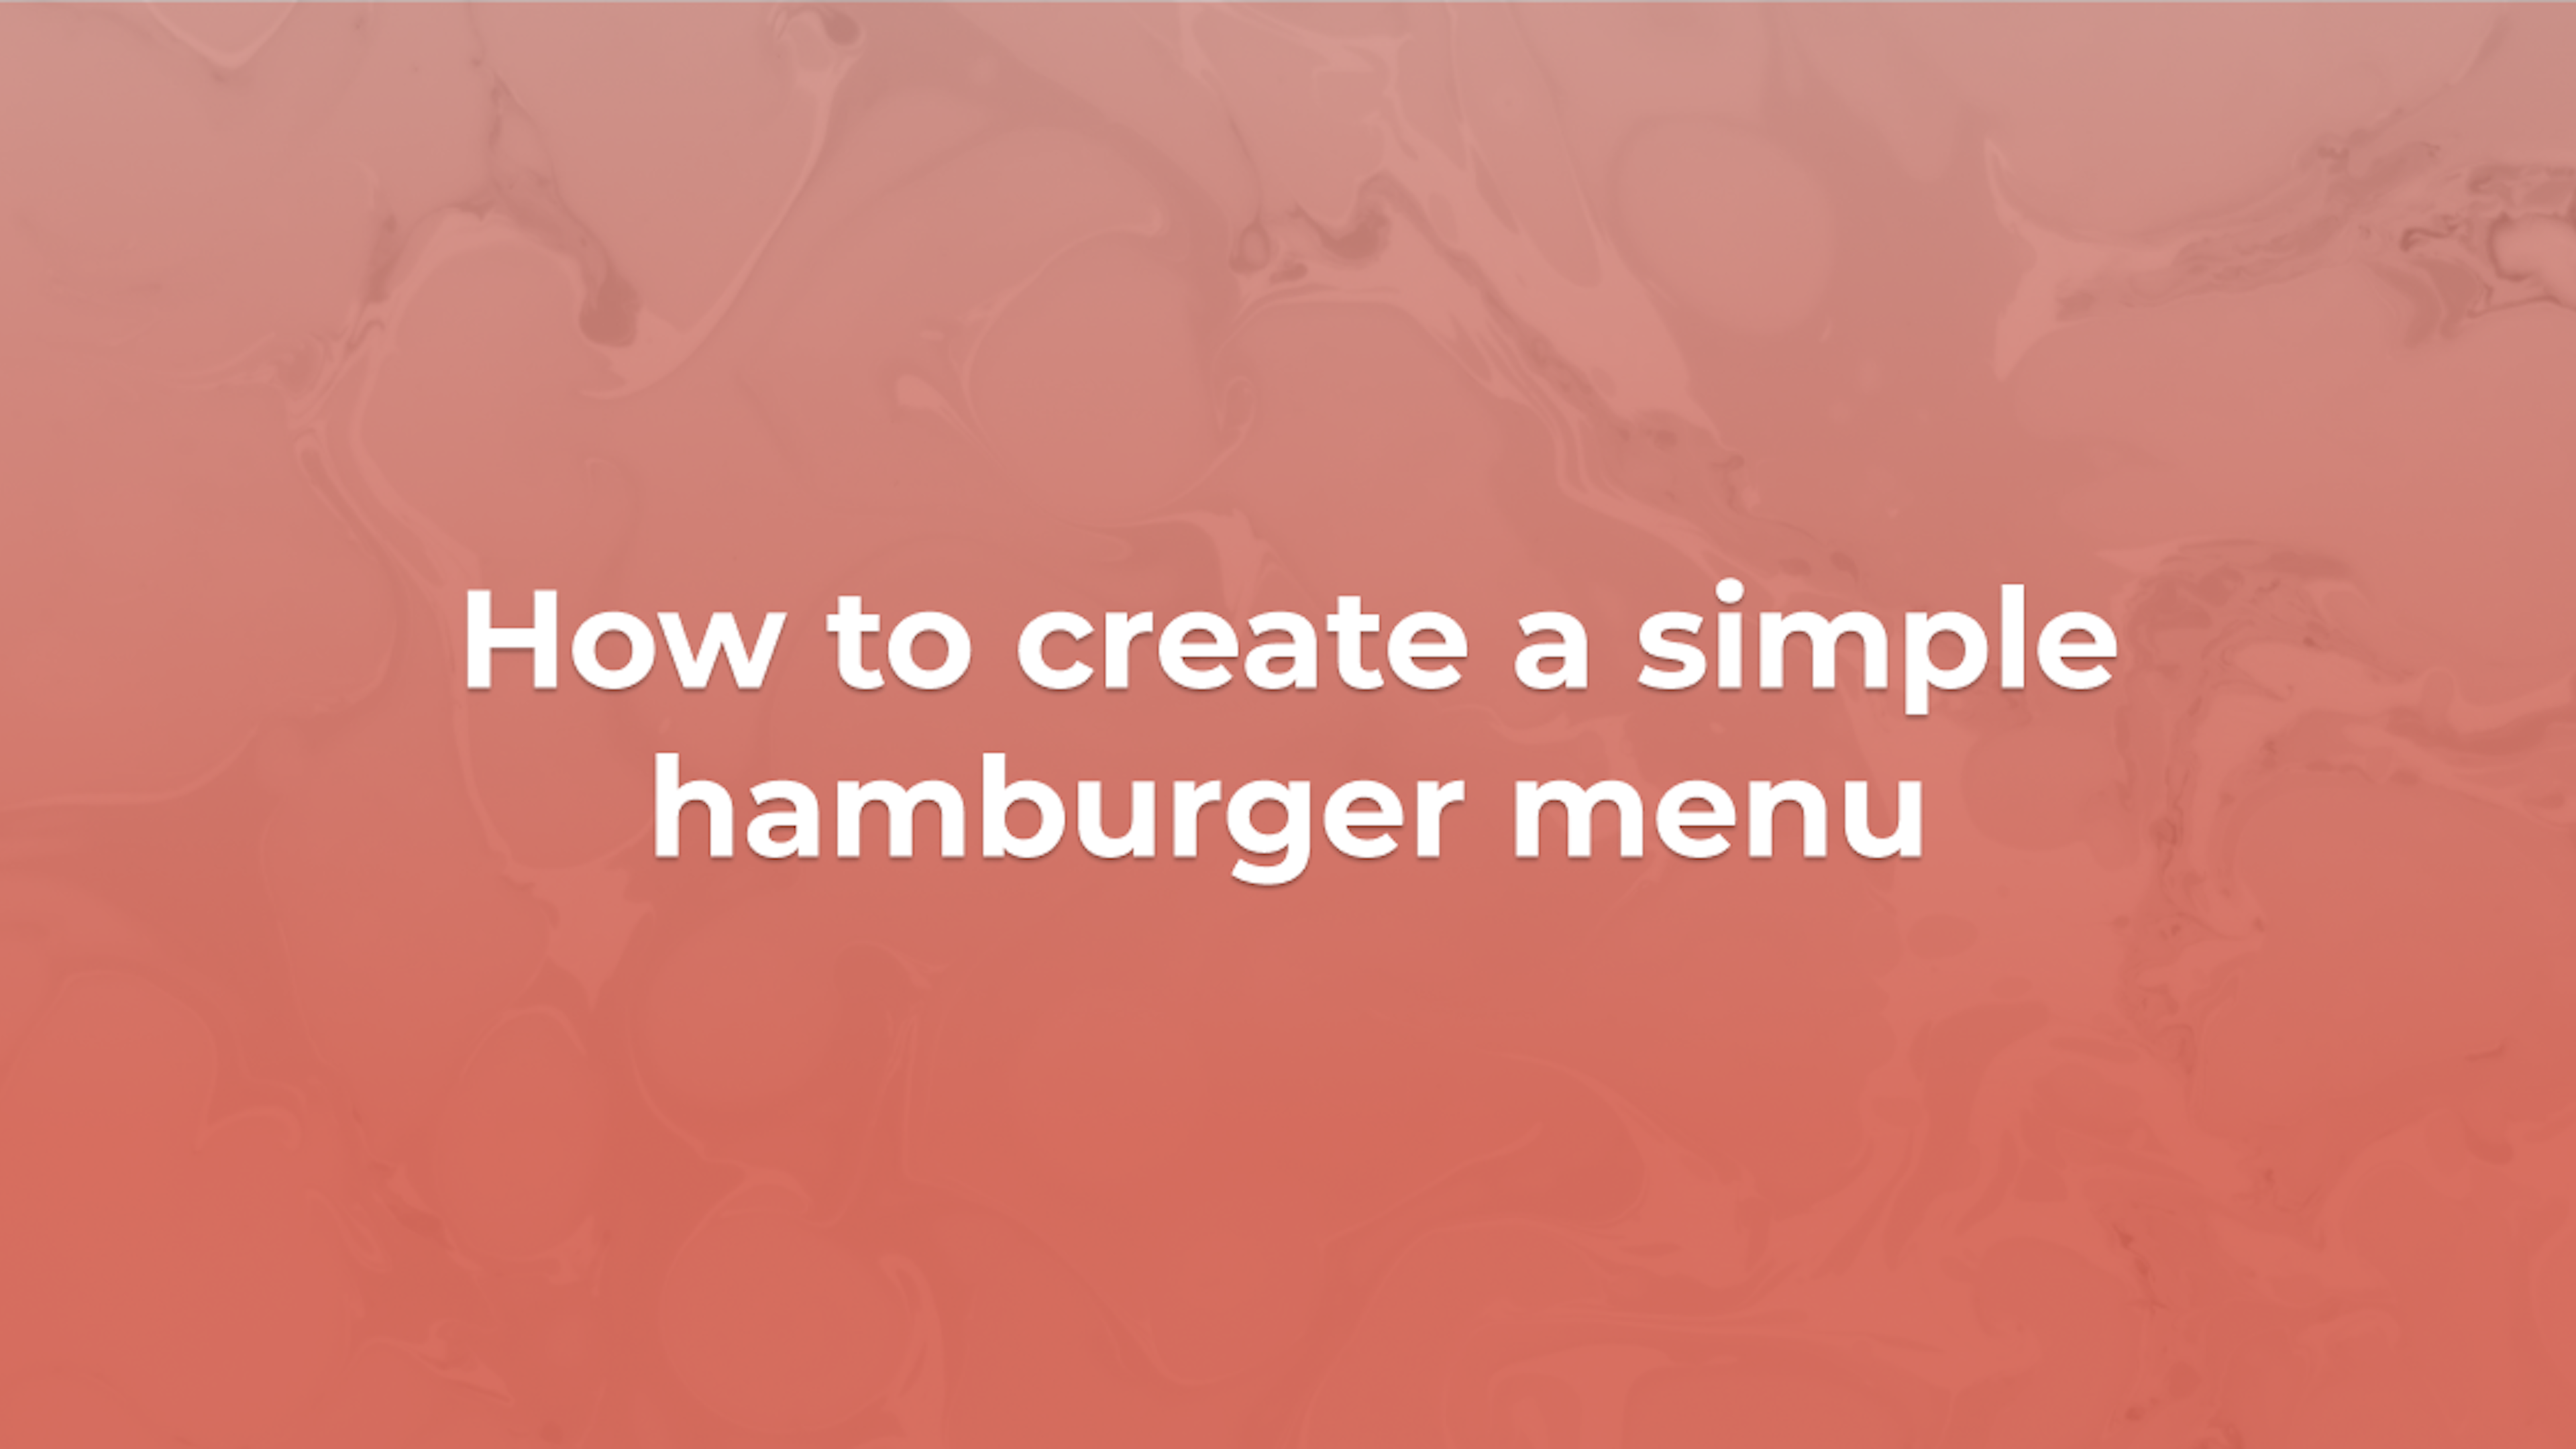 How to create a simple hamburger menu